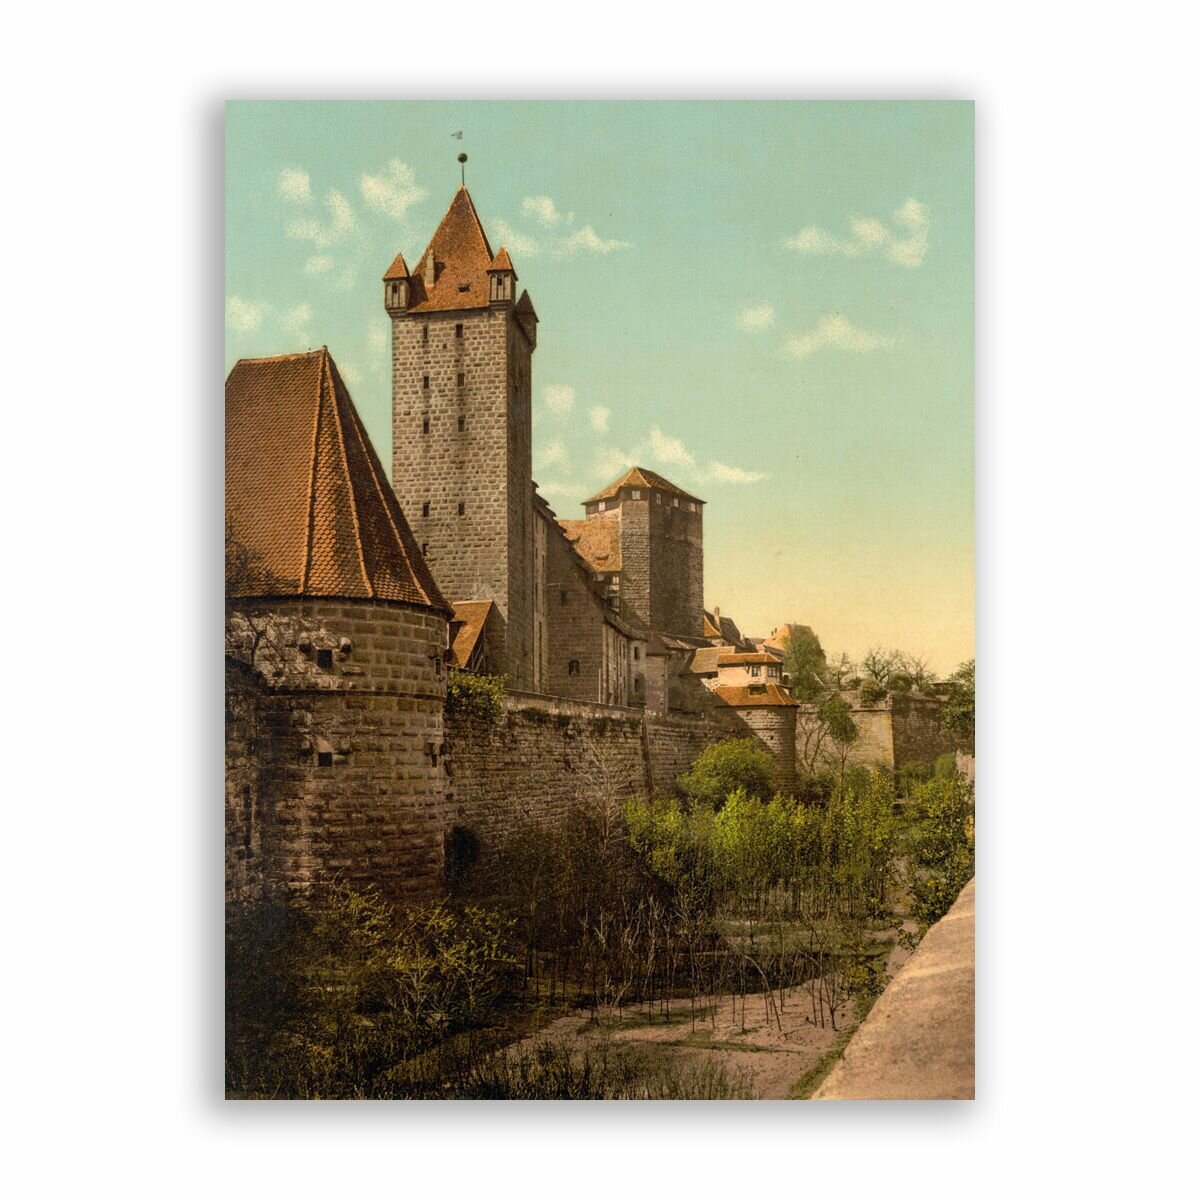 Постер, плакат на бумаге / Ludinsland, Nuremberg, Bavaria, Germany / Размер 30 x 40 см